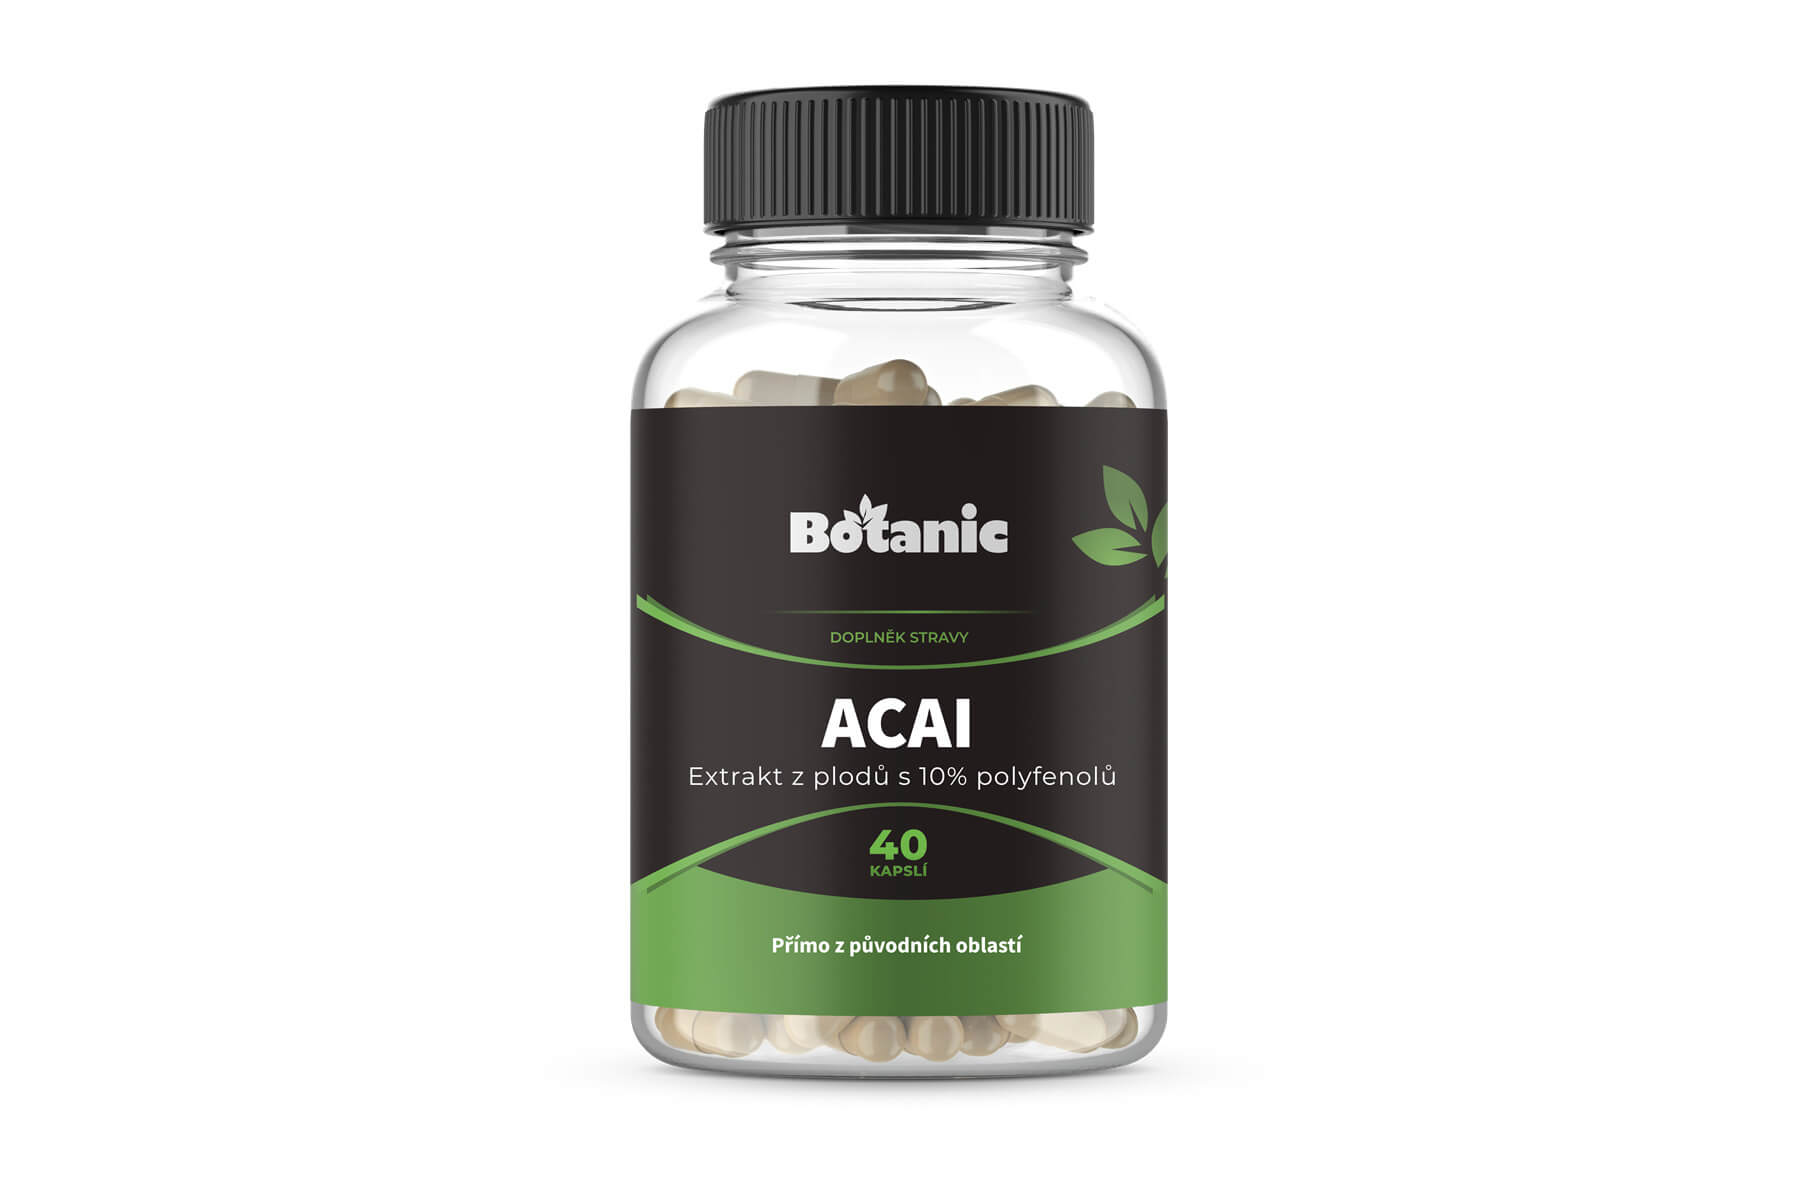 Botanic Acai - Extrakt z plodov s 10% polyfenolov v kapsuliach 40kap.